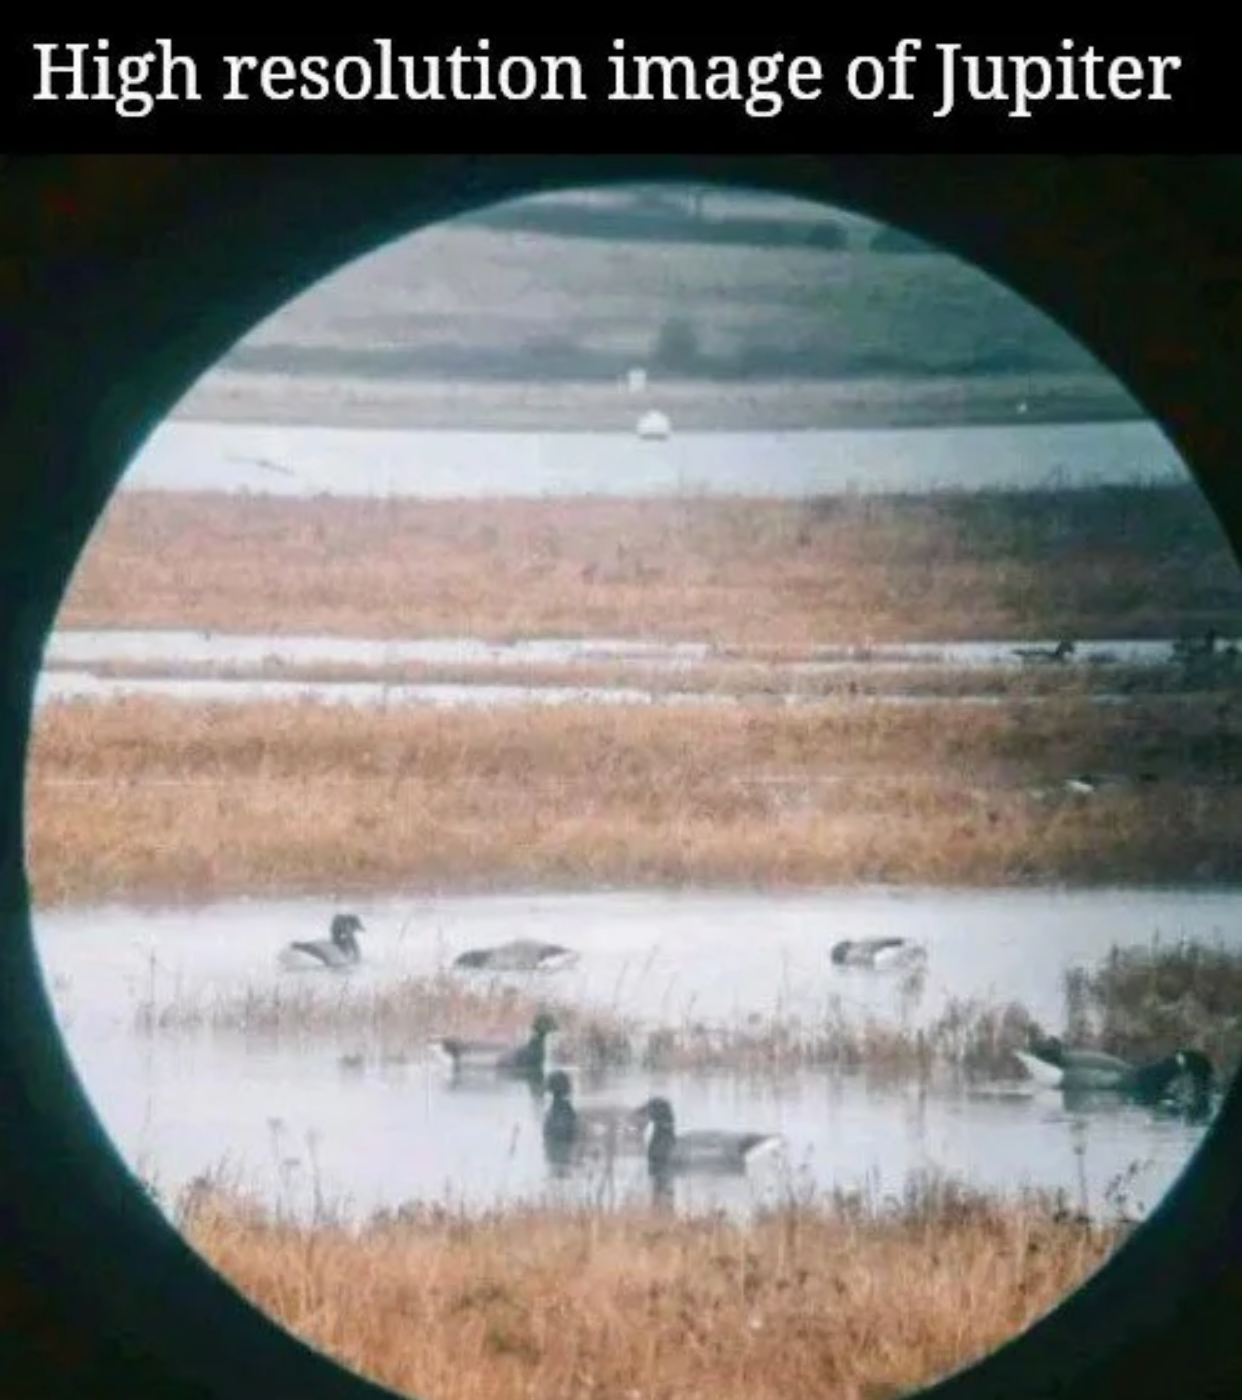 High resolution image of Jupiter